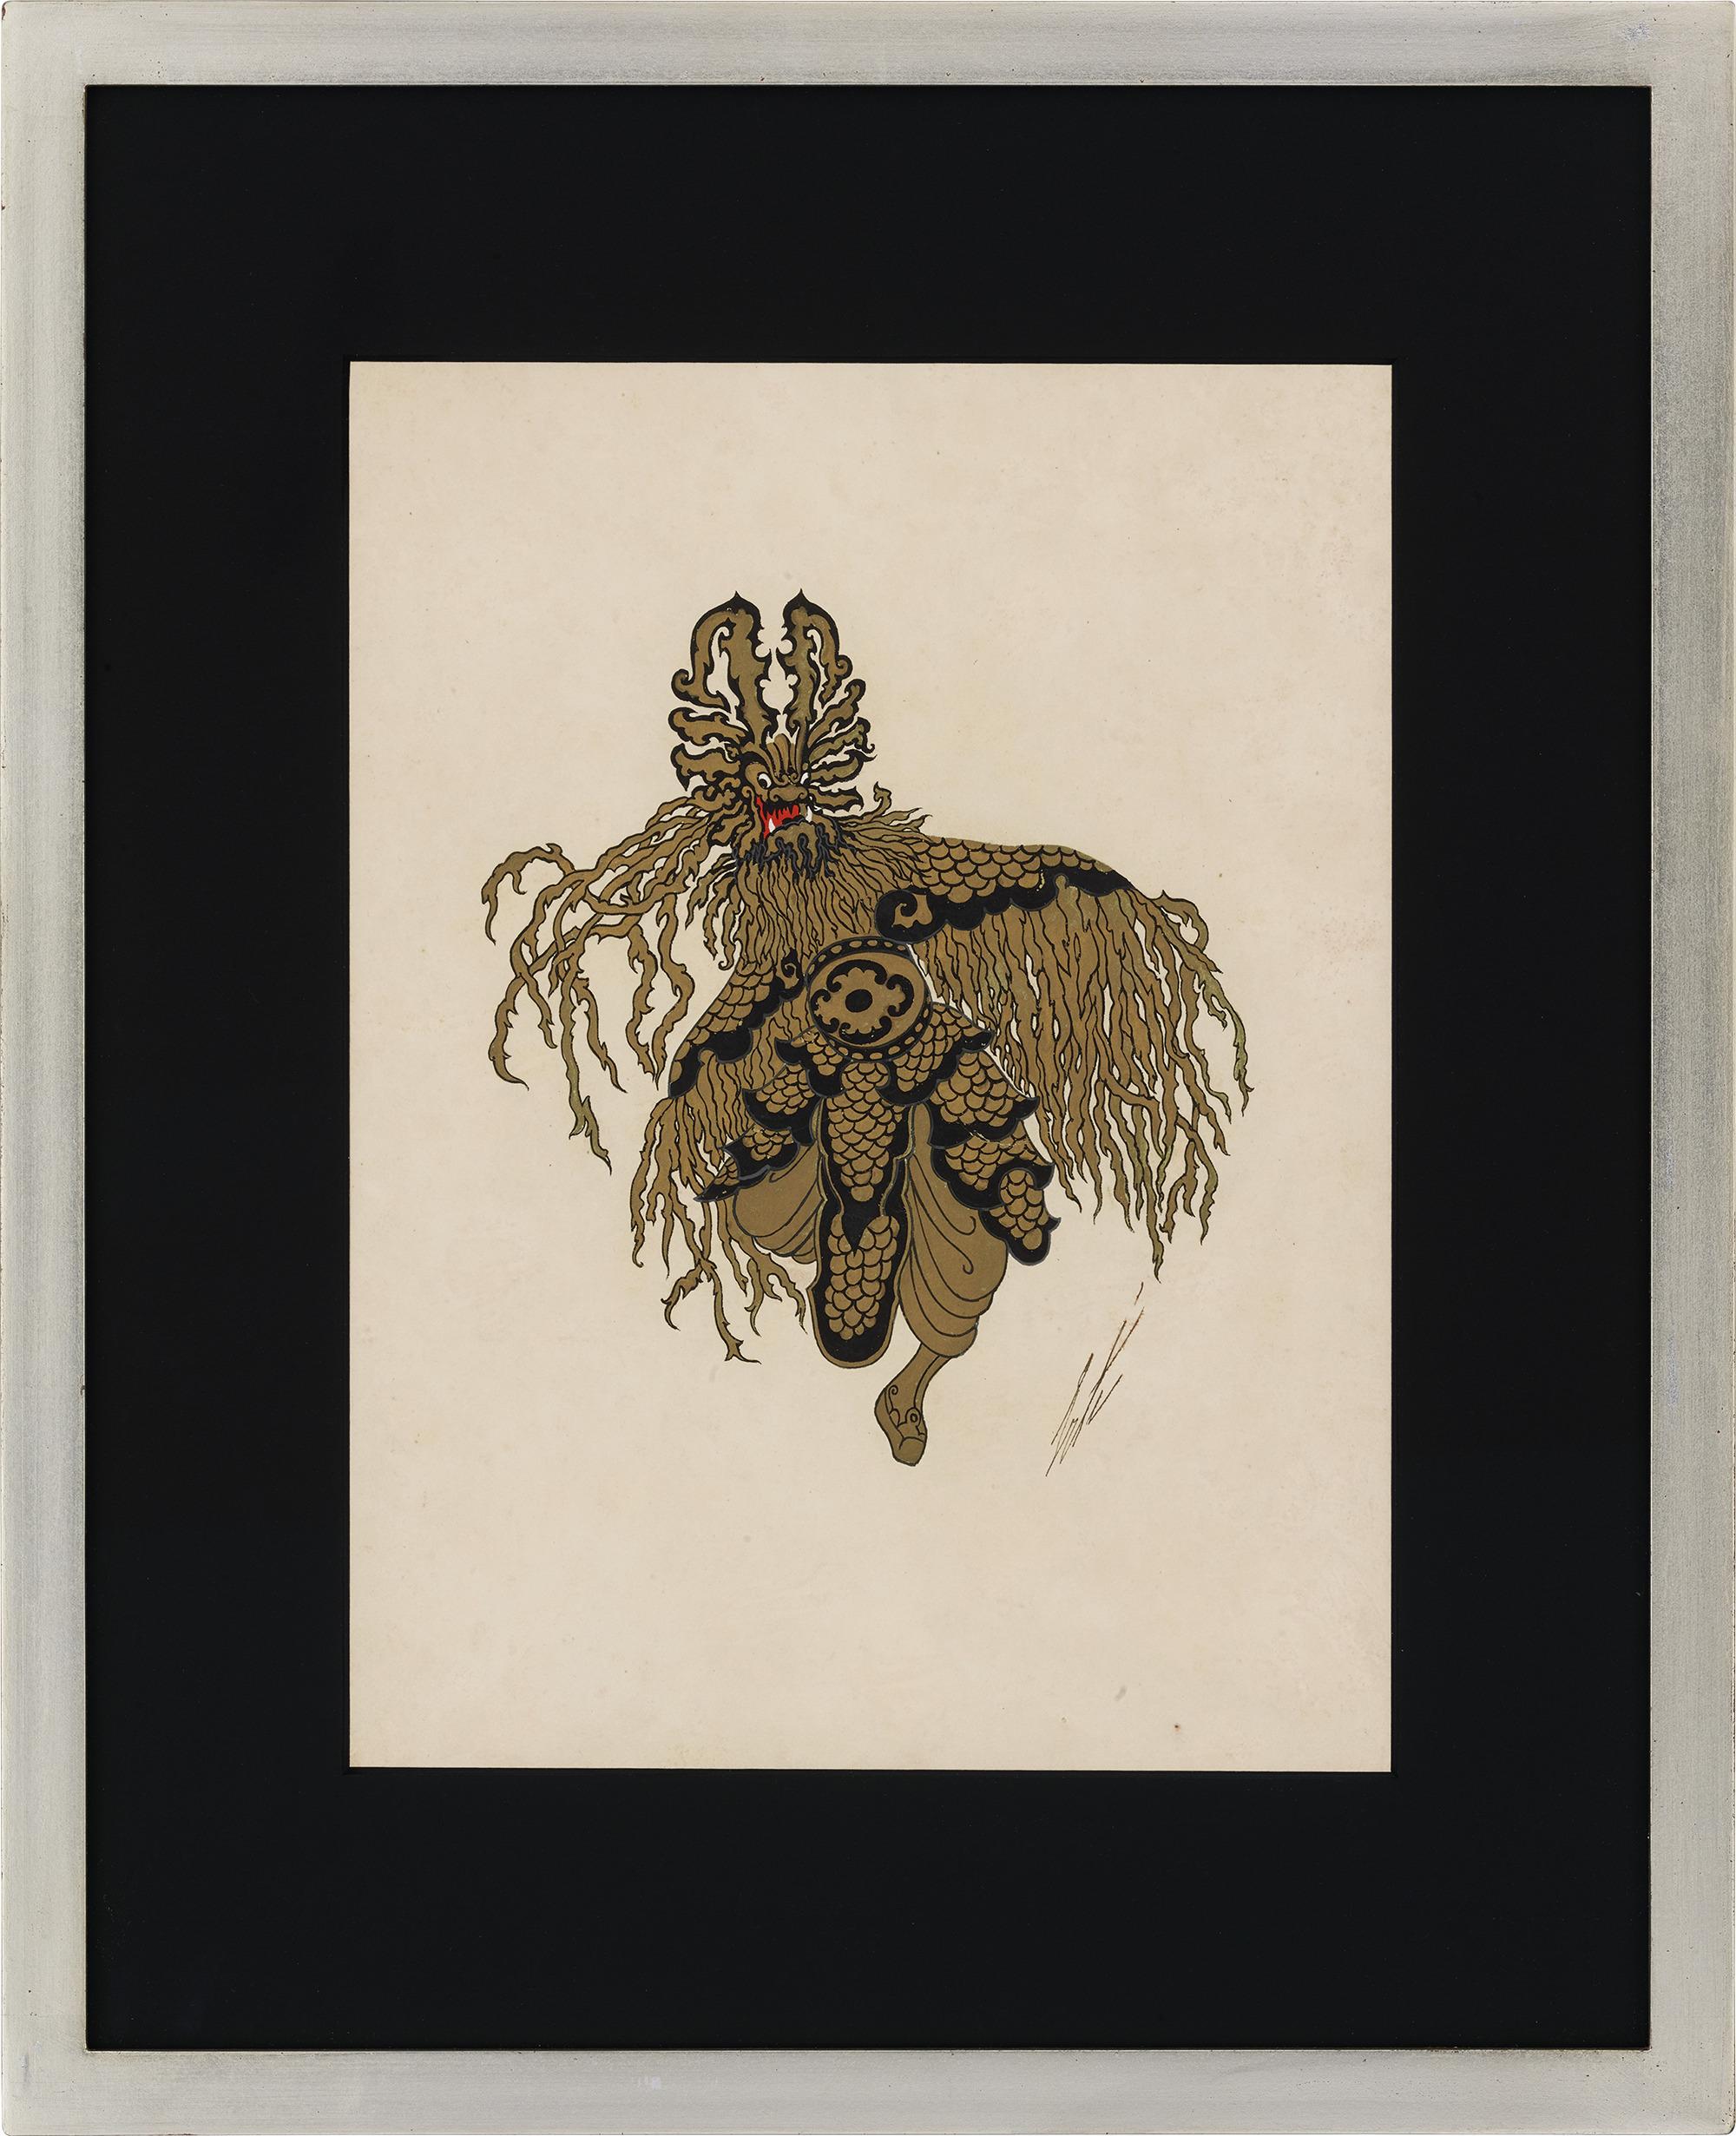 Erté (Romain de Tirtoff)
1892-1990  Russisch-Französisch
Les Dragons
(Die Drachen)

Signiert 